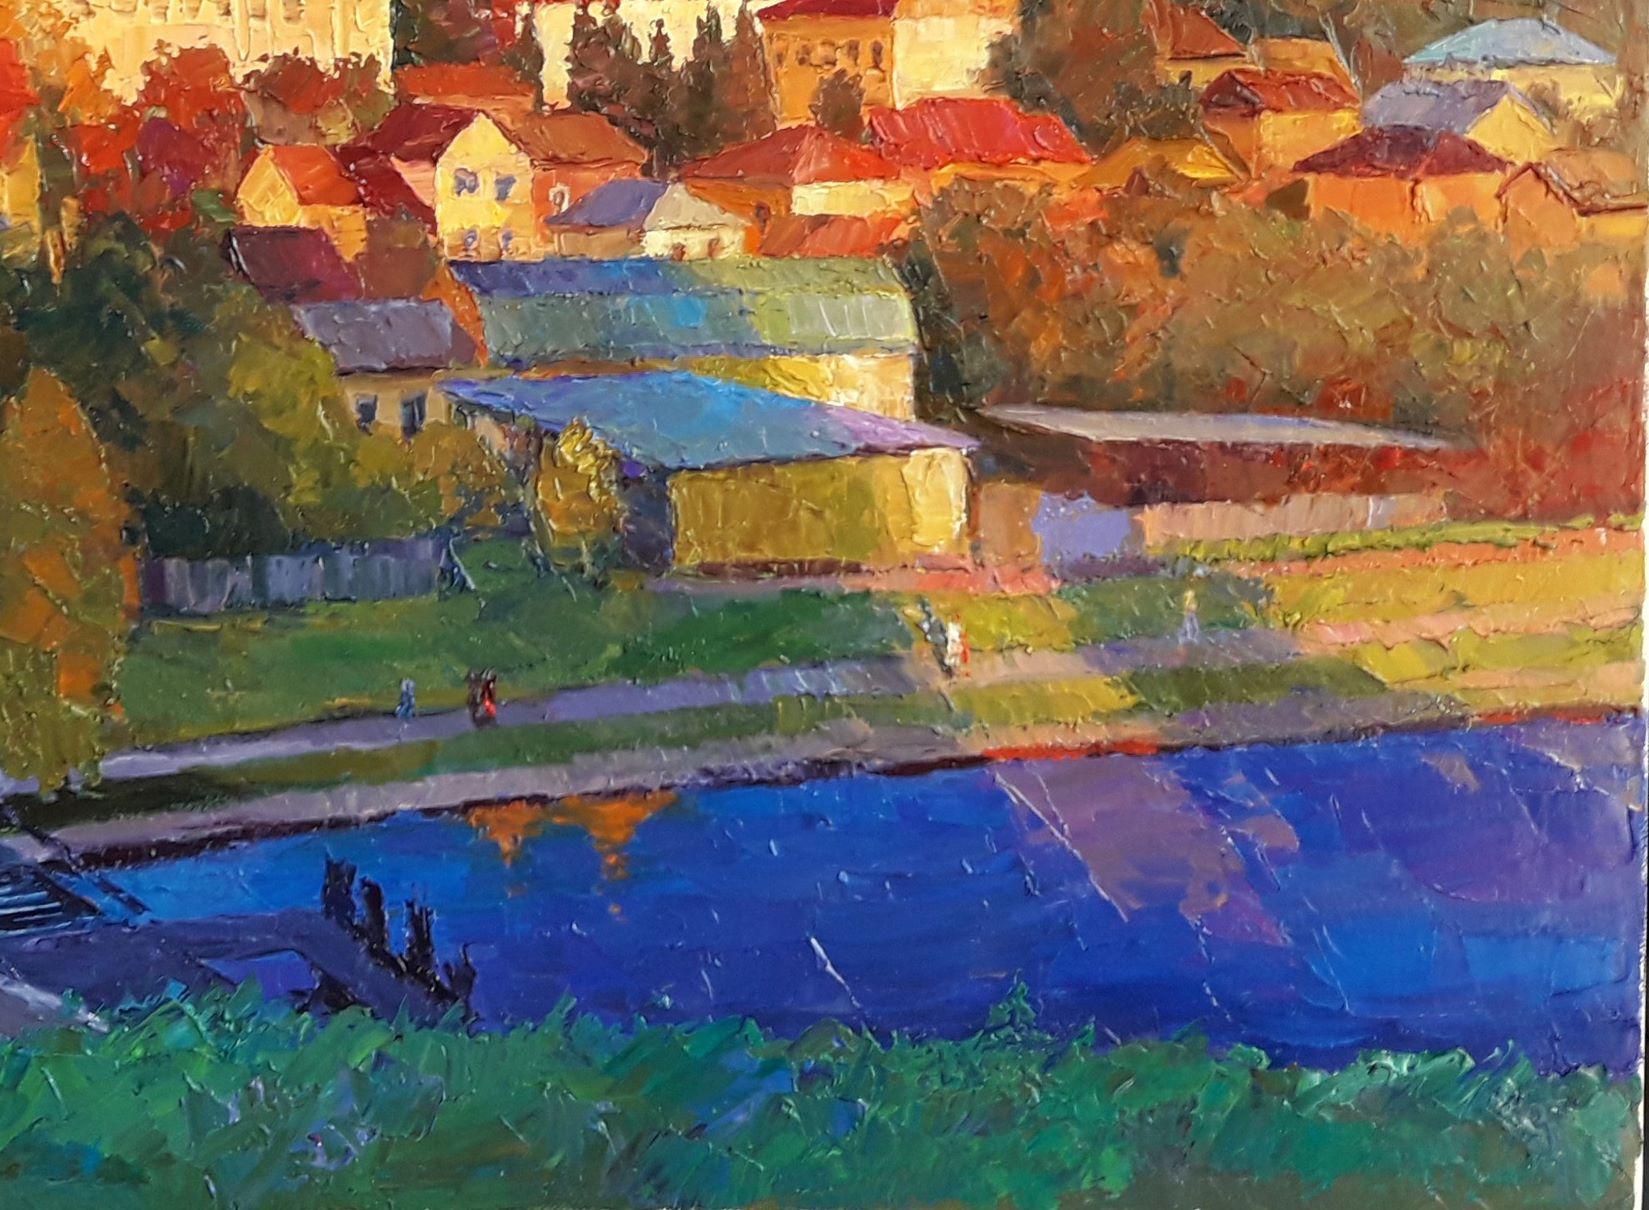 Artist: Boris Serdyuk 
Work: Original oil painting, handmade artwork, one of a kind 
Medium: Oil on Canvas
Style: Impressionism
Year: 2020
Title: Autumn in Ternopol
Size: 23.5